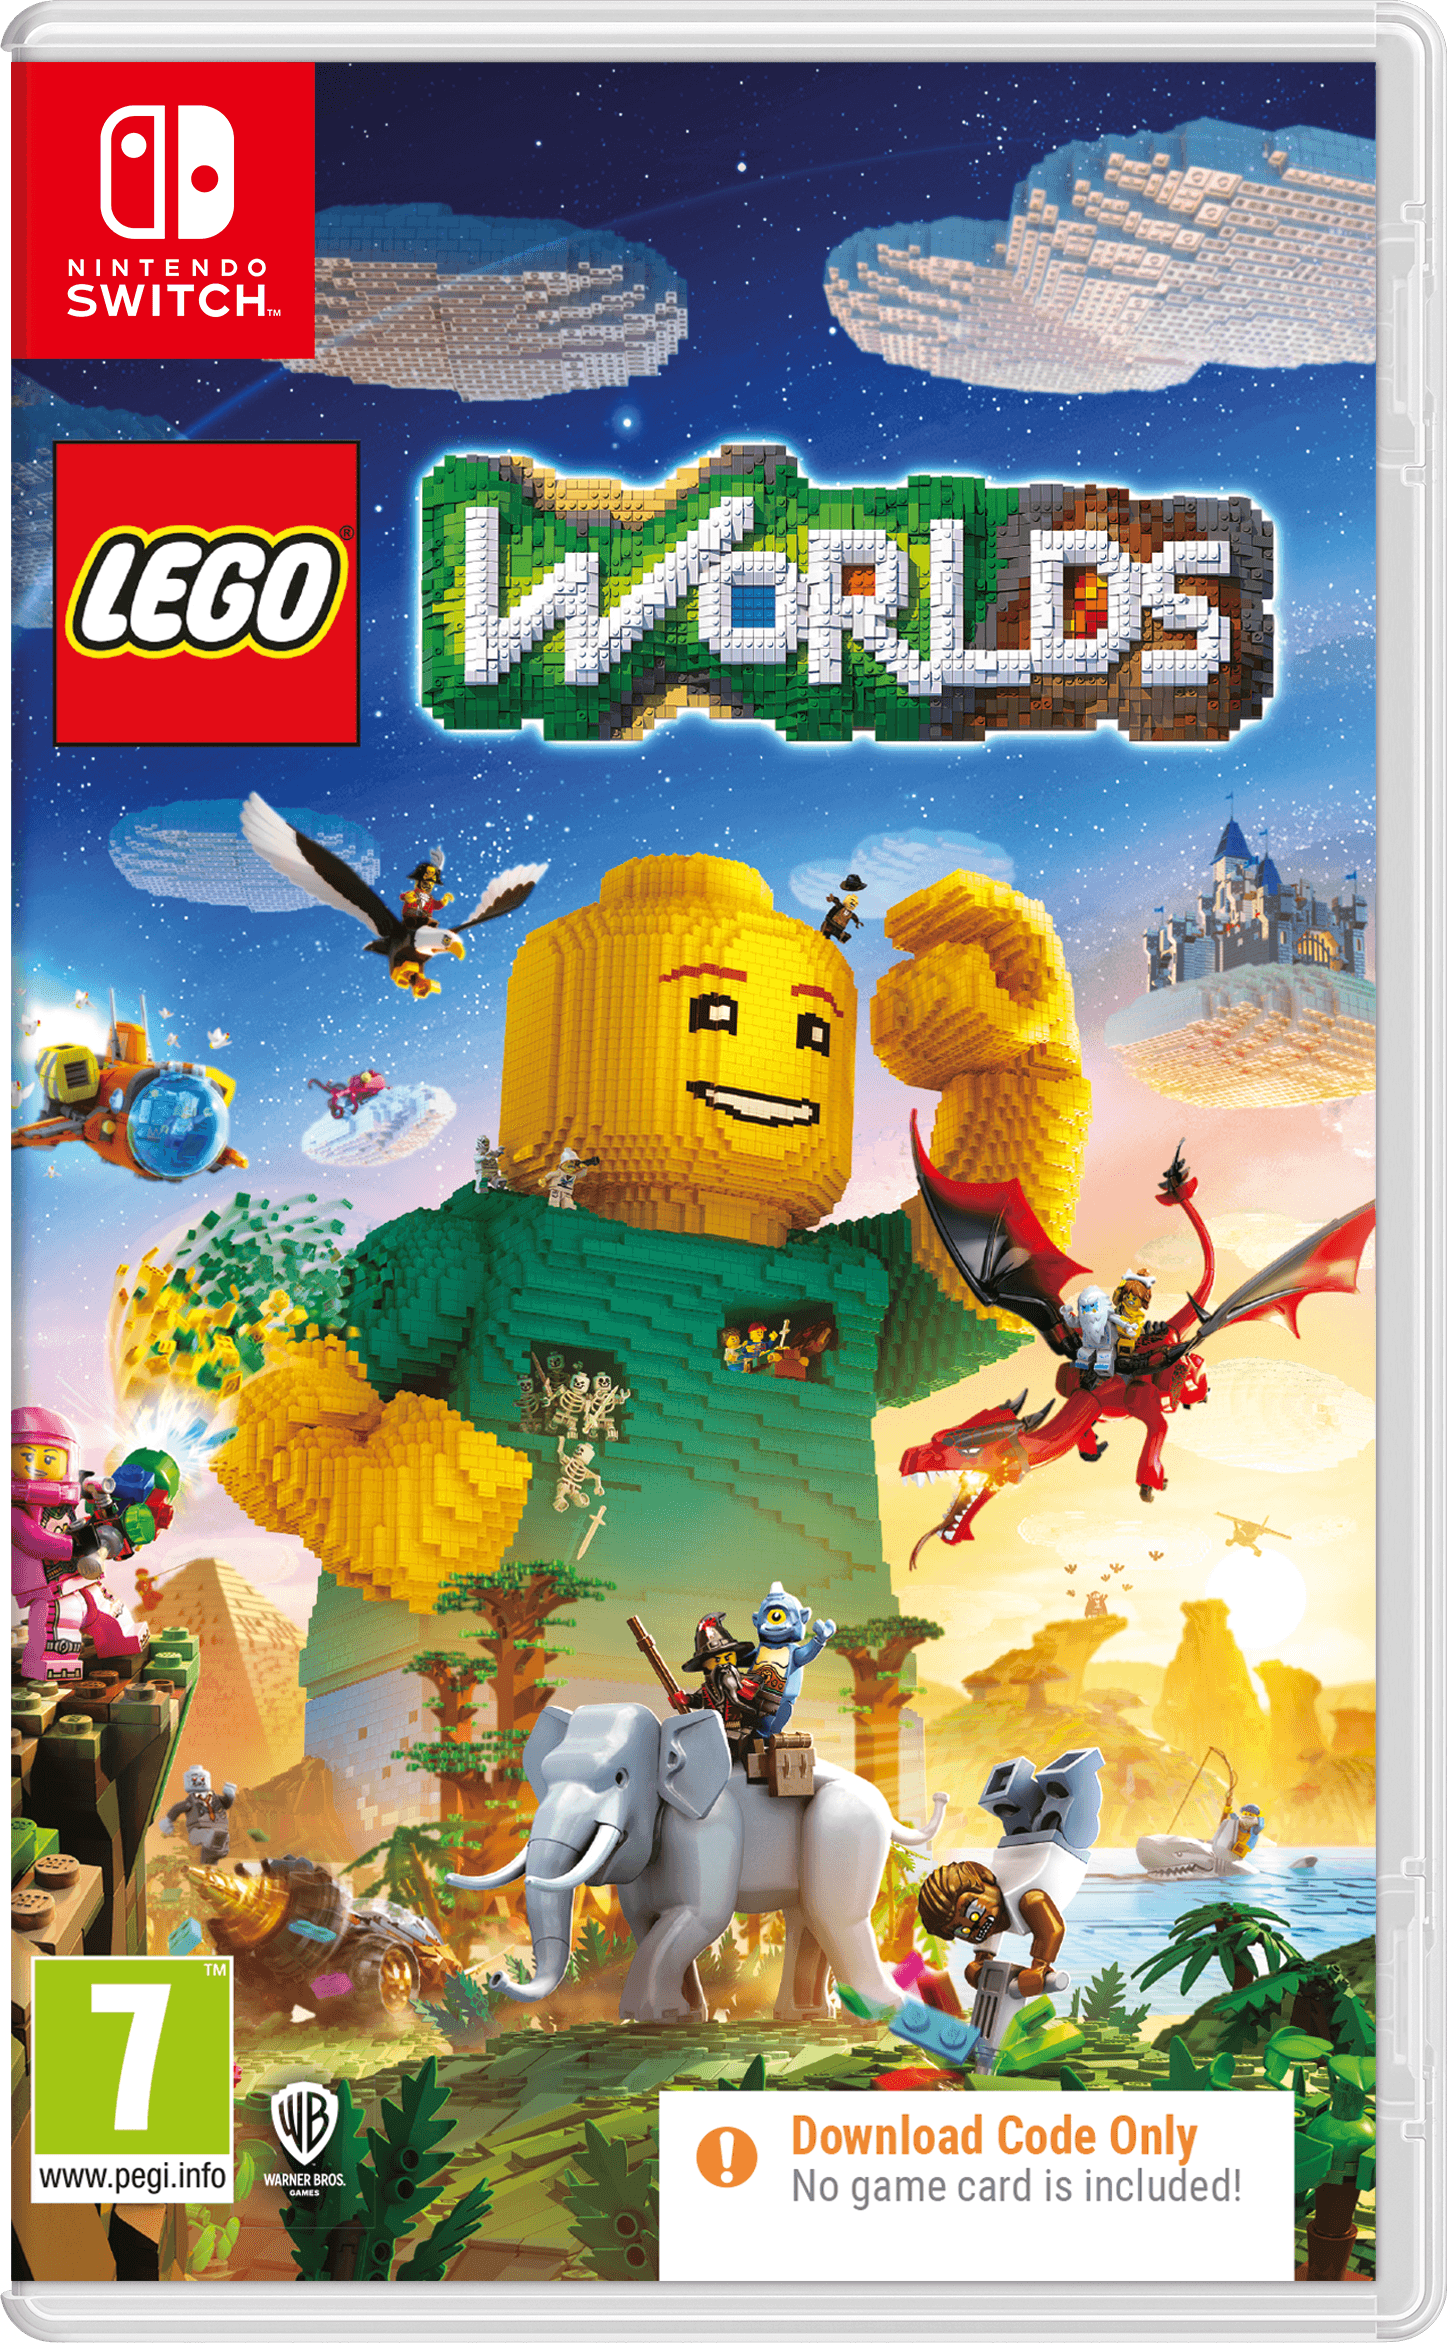 Lego Worlds Cib - Want a New Gadget